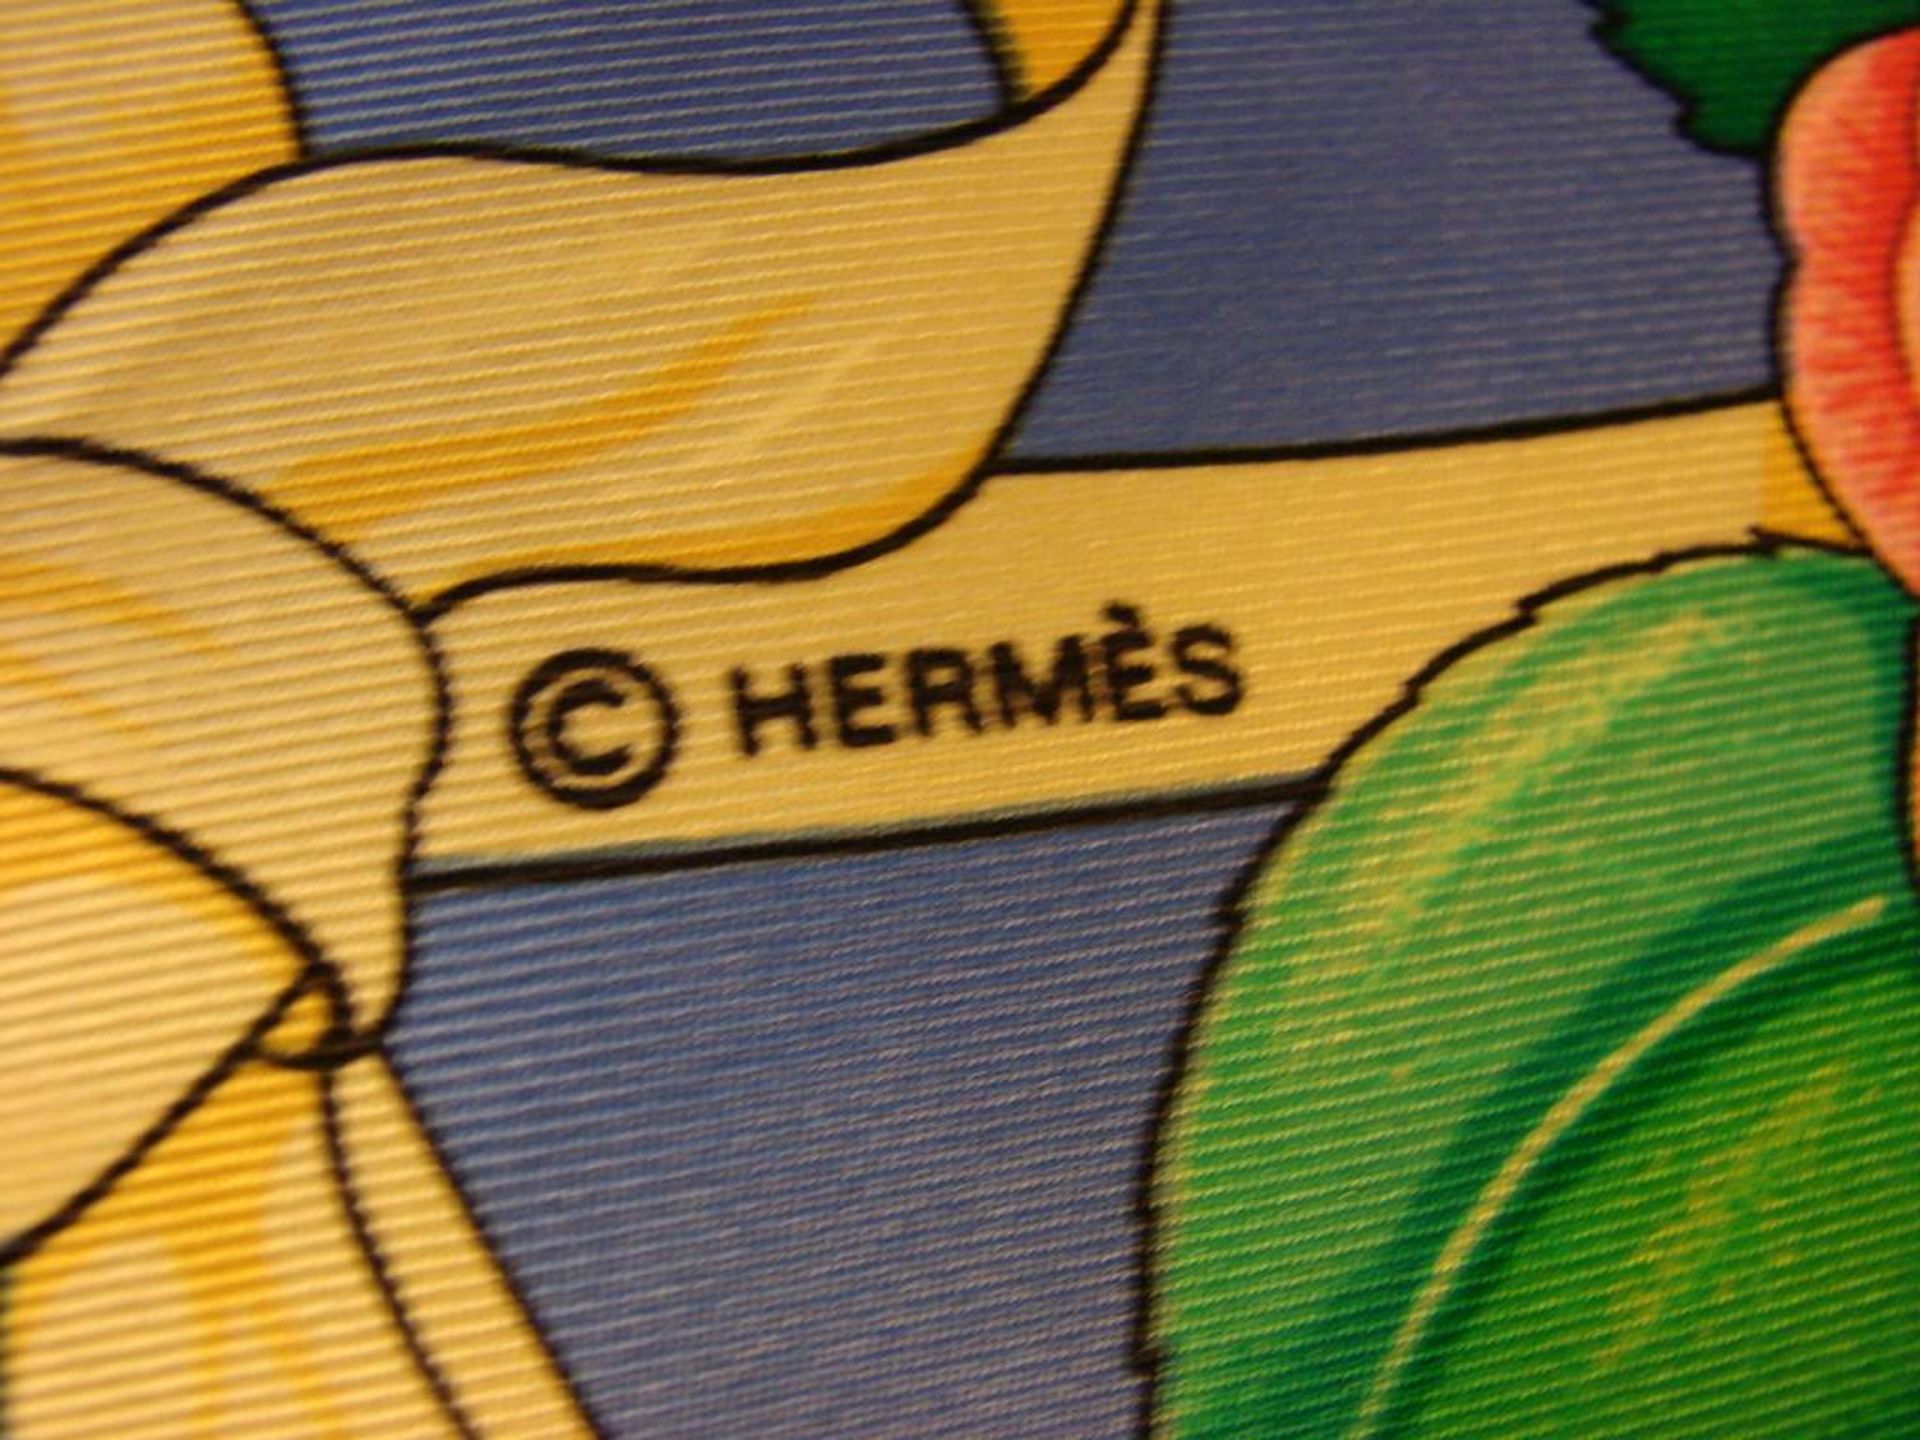 Hèrmes, Seidentuch, "Fleurs de l'Opéra", 90 x 90 cm- - -22.00 % buyer's premium on the hammer - Image 2 of 2